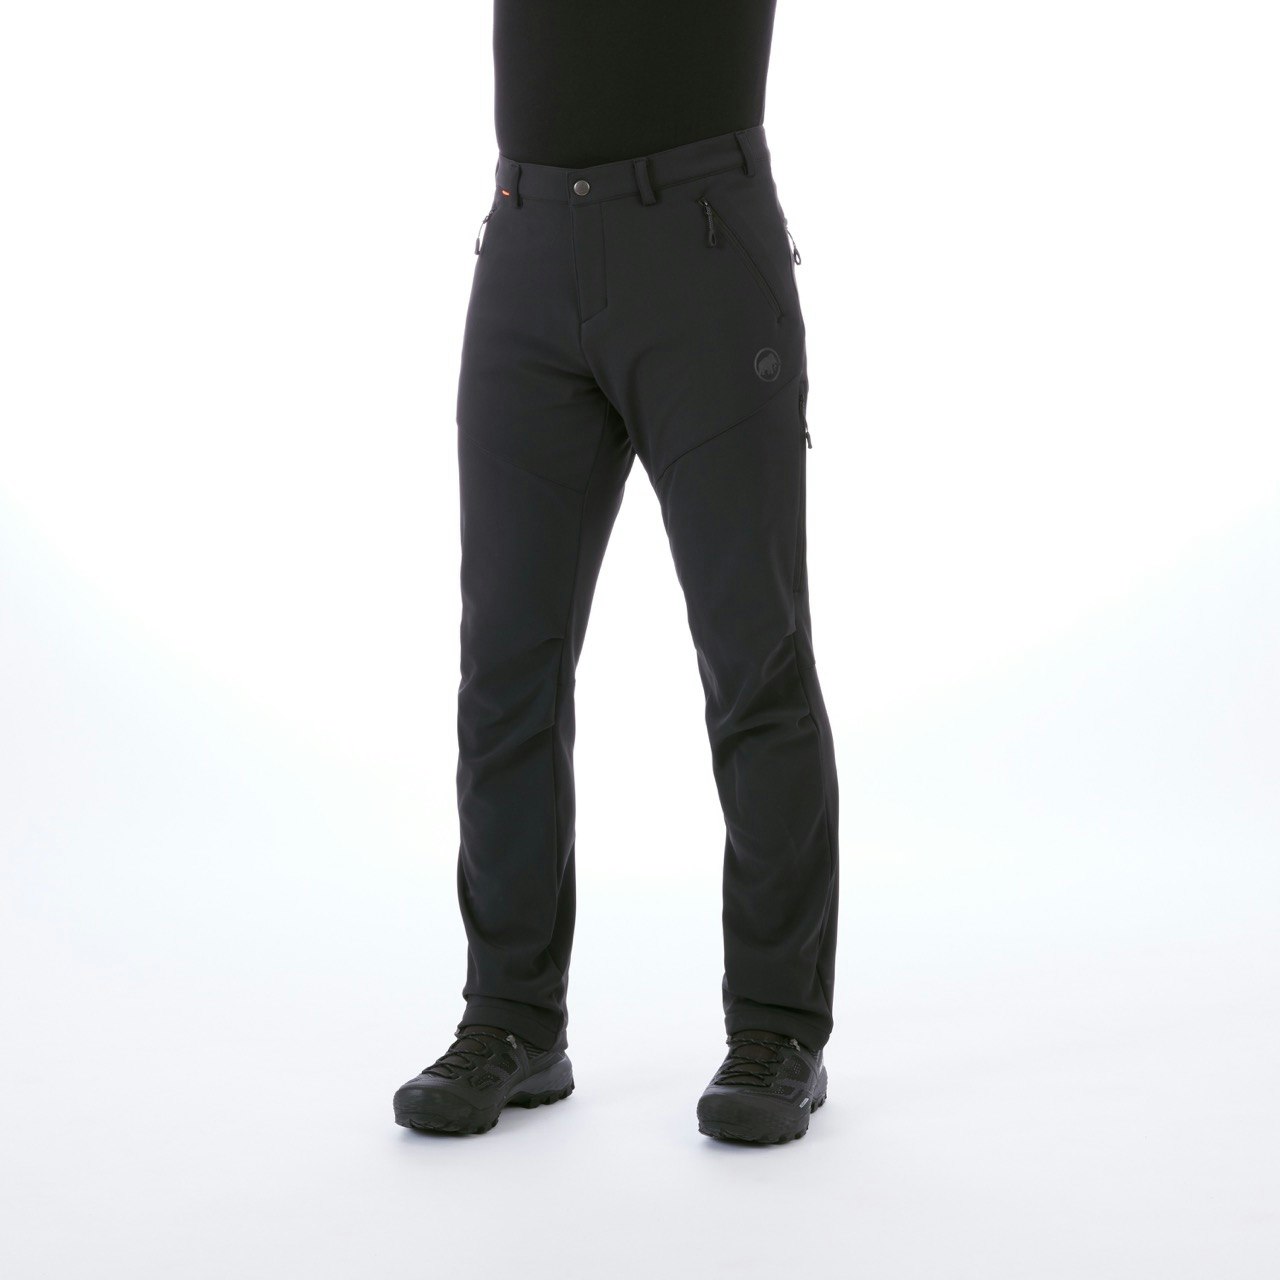 a man's torso wearing a black shirt, black Mammut winter hiking pants, and black boots